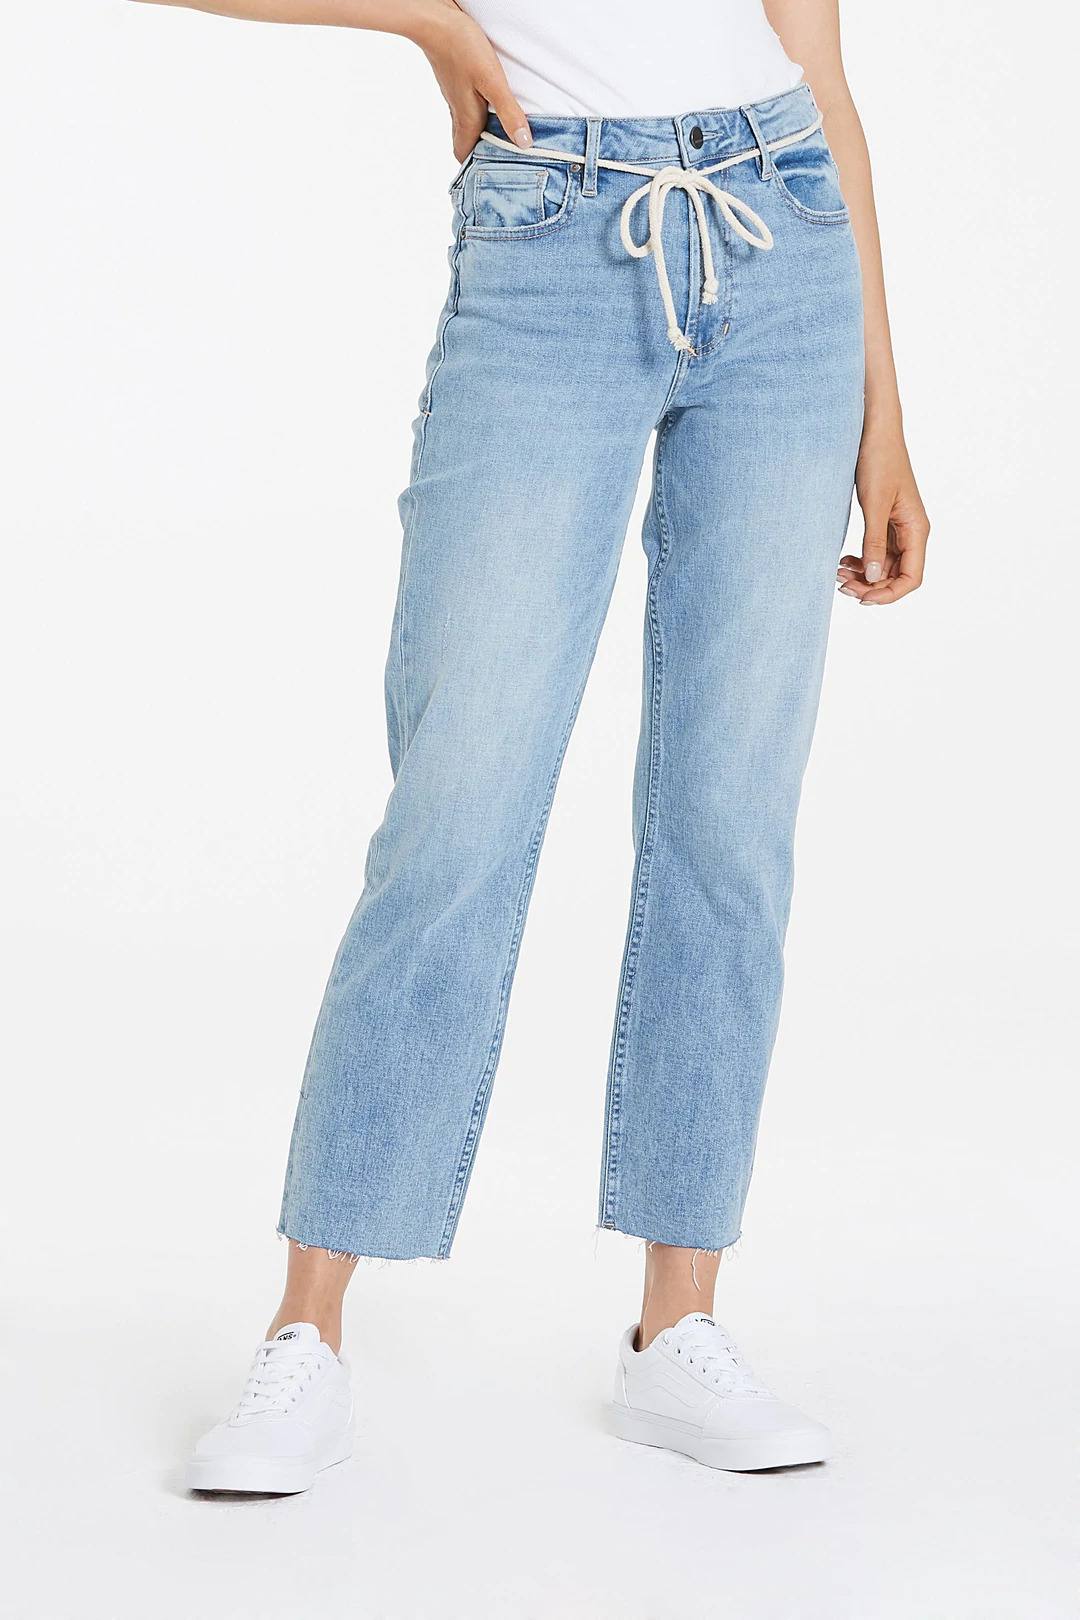 Dear John Denim Jodi High-Rise Cropped Straight Geneva Jeans Front.